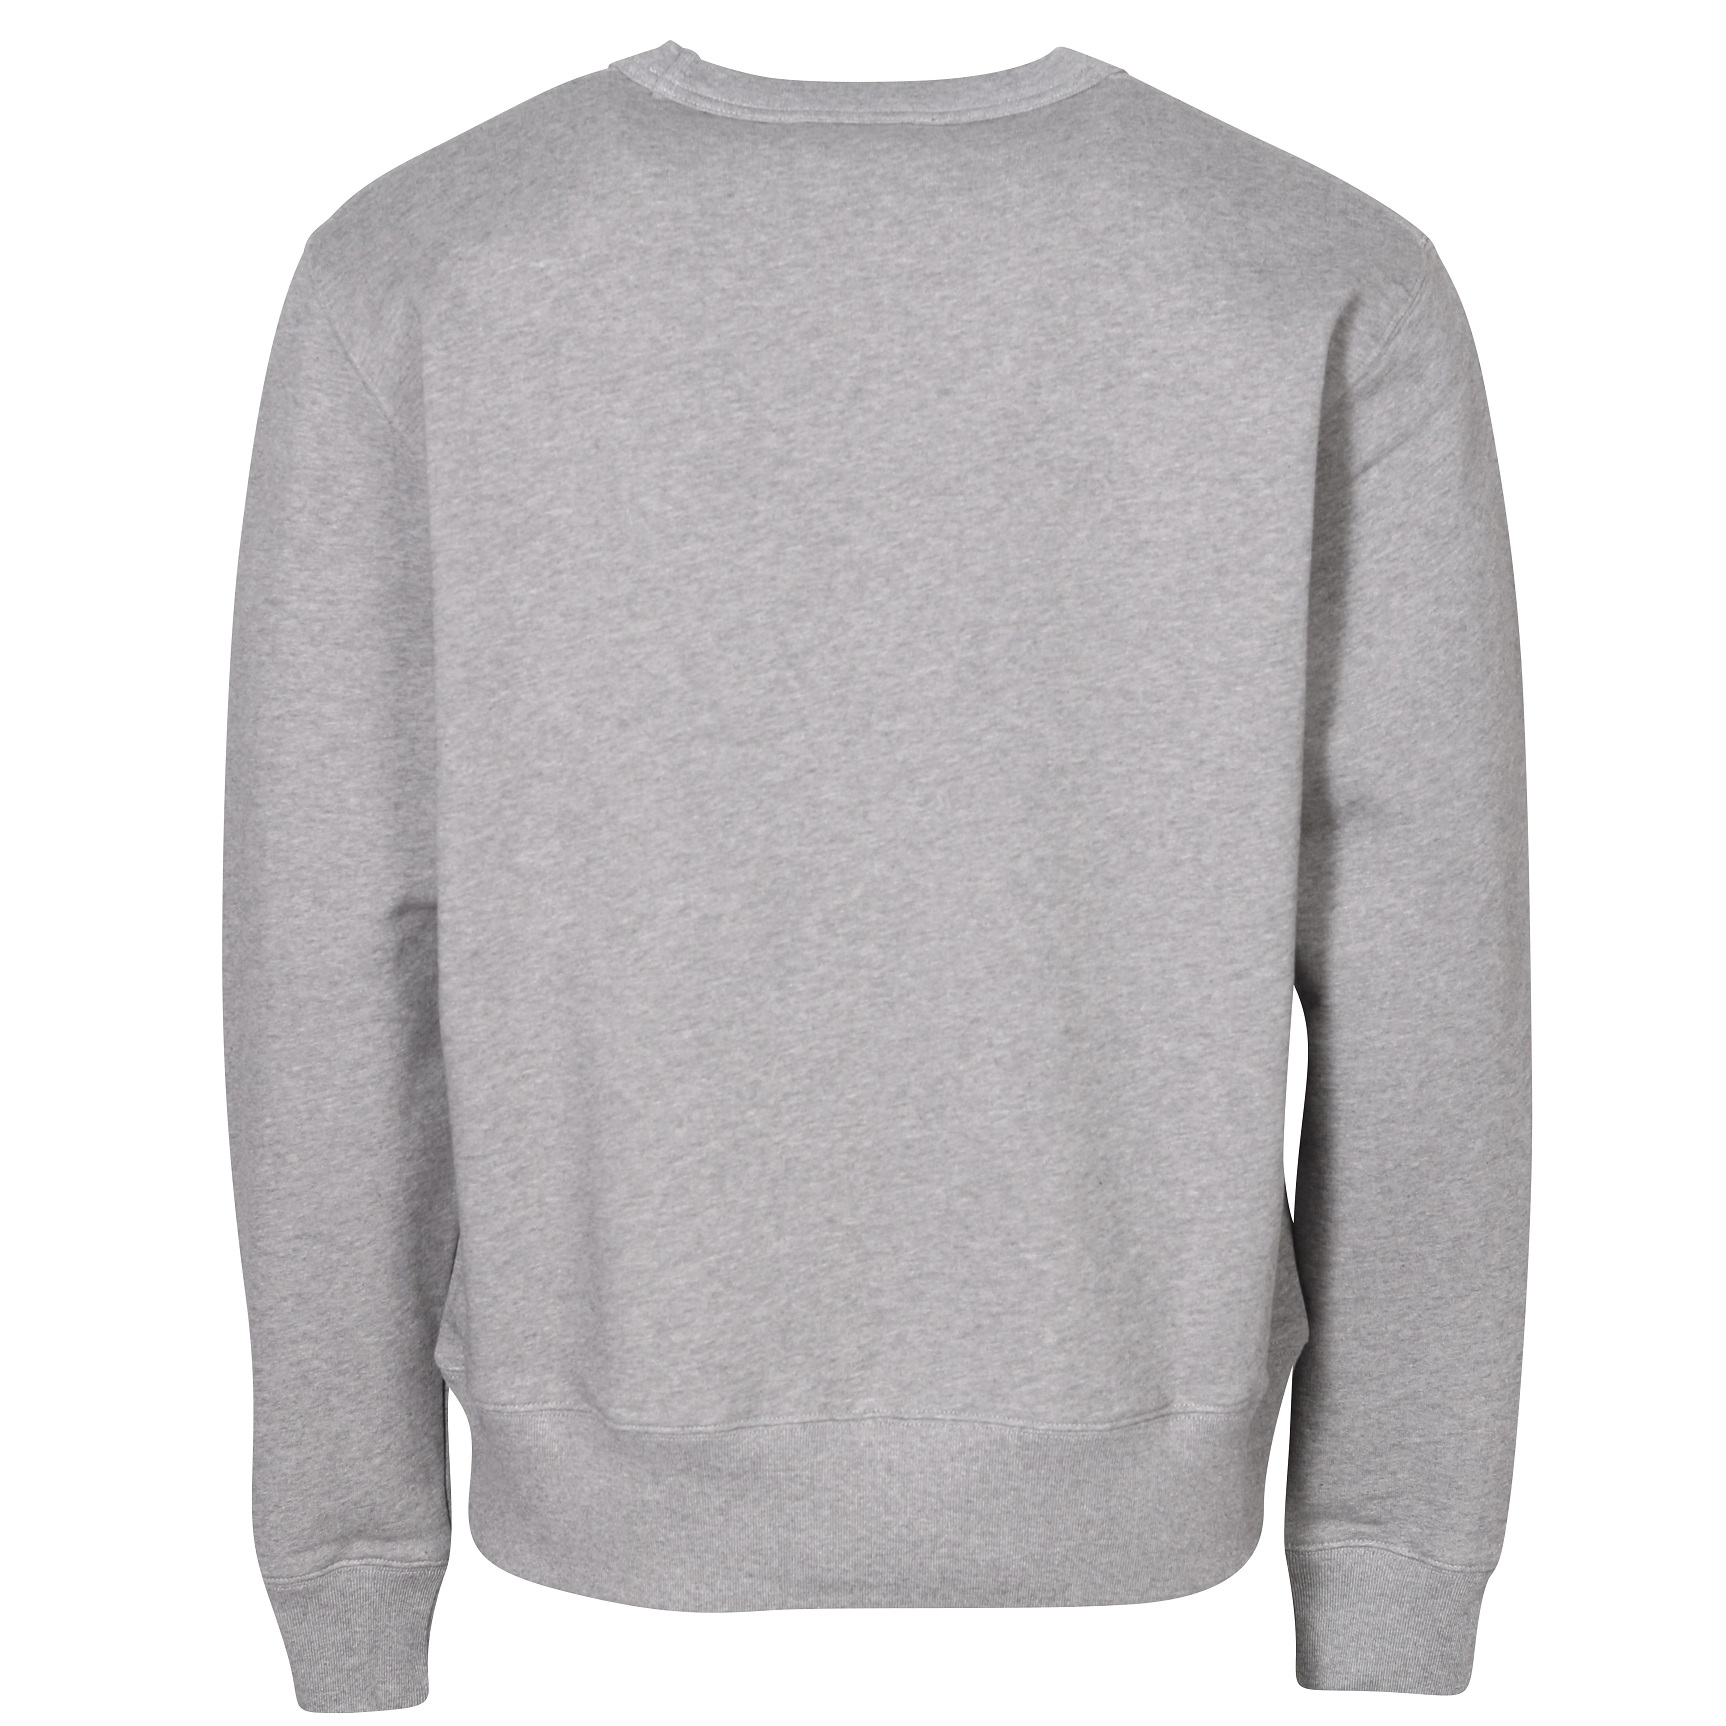 ACNE STUDIOS Unisex Regular Face Sweatshirt in Light Grey Melange XXL